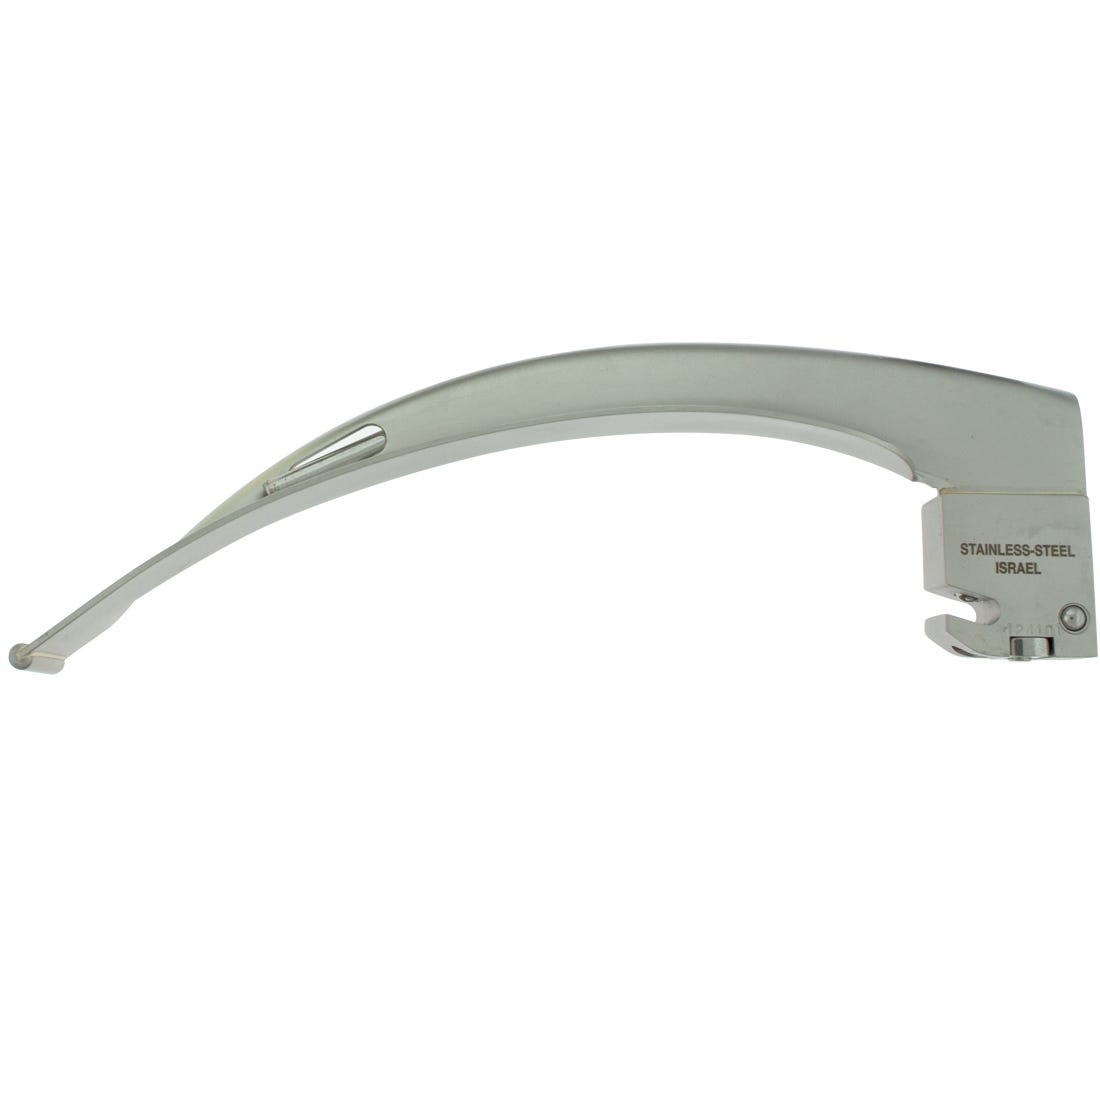 Rusch Standard Fitting FiberOptic Laryngoscope Blades - Macintosh, Size 4, Large Adult, Fits standard Rusch Handle